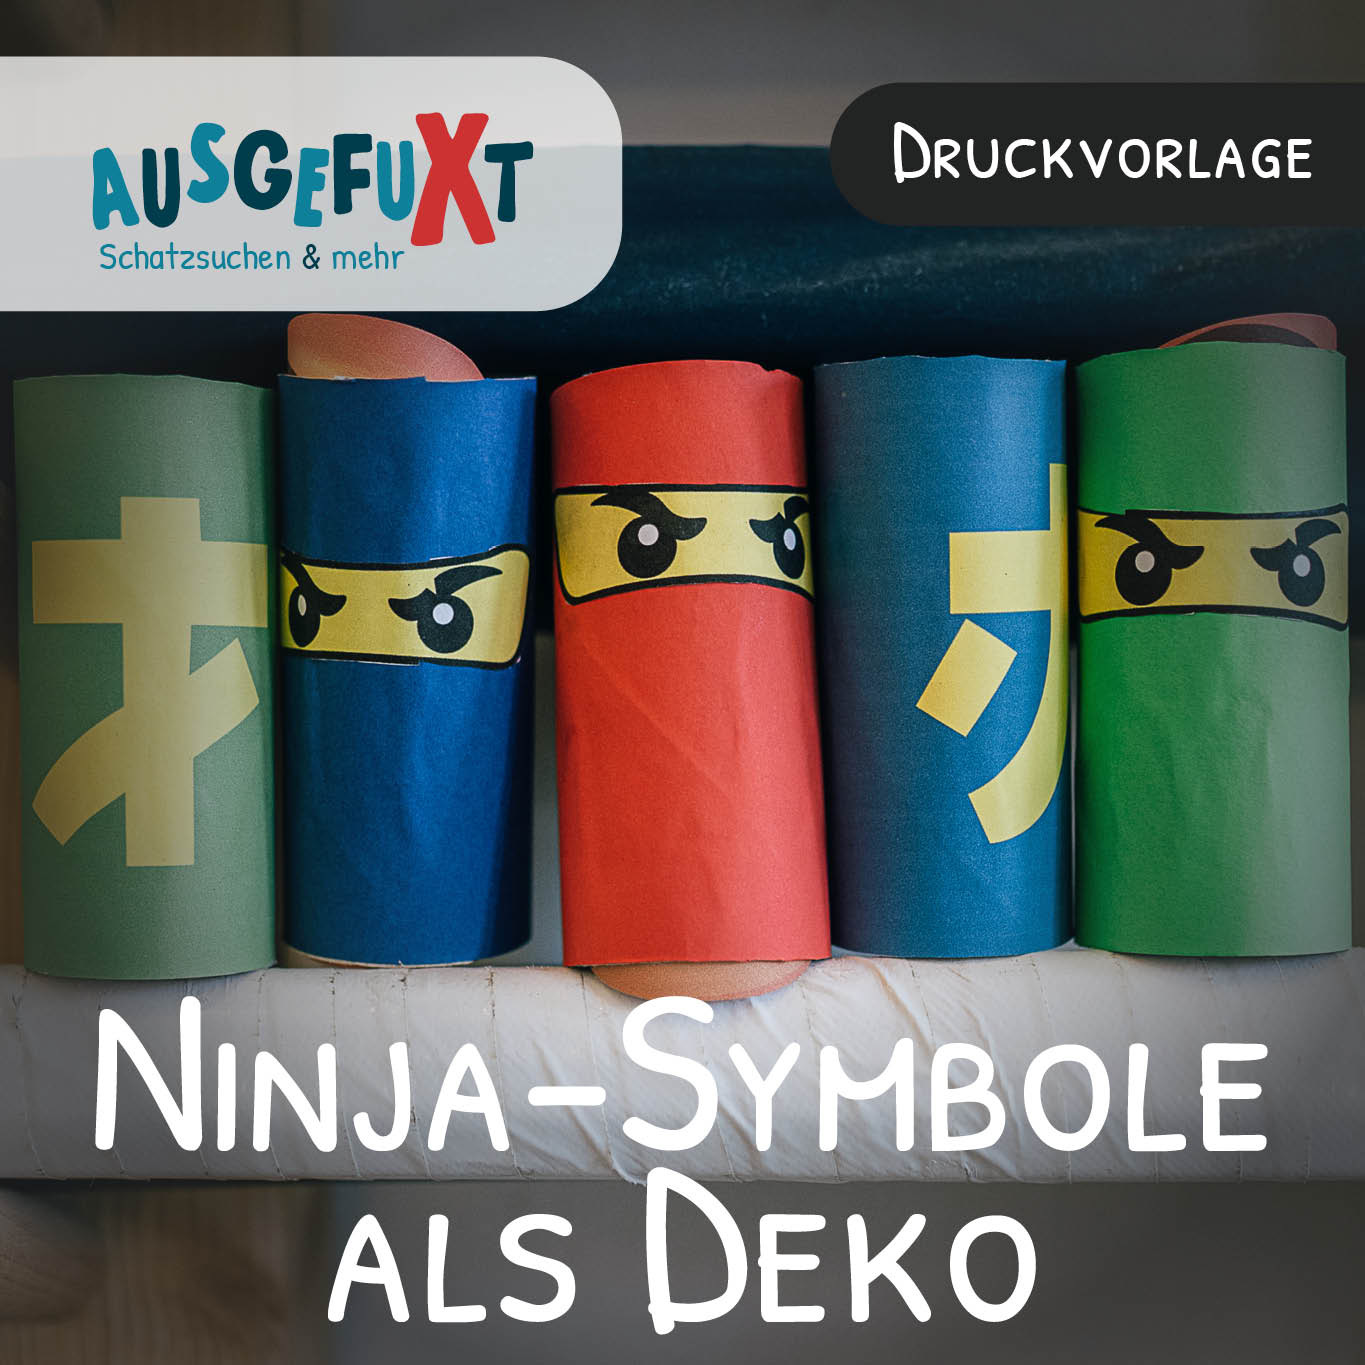 Ninja-Symbole als Deko